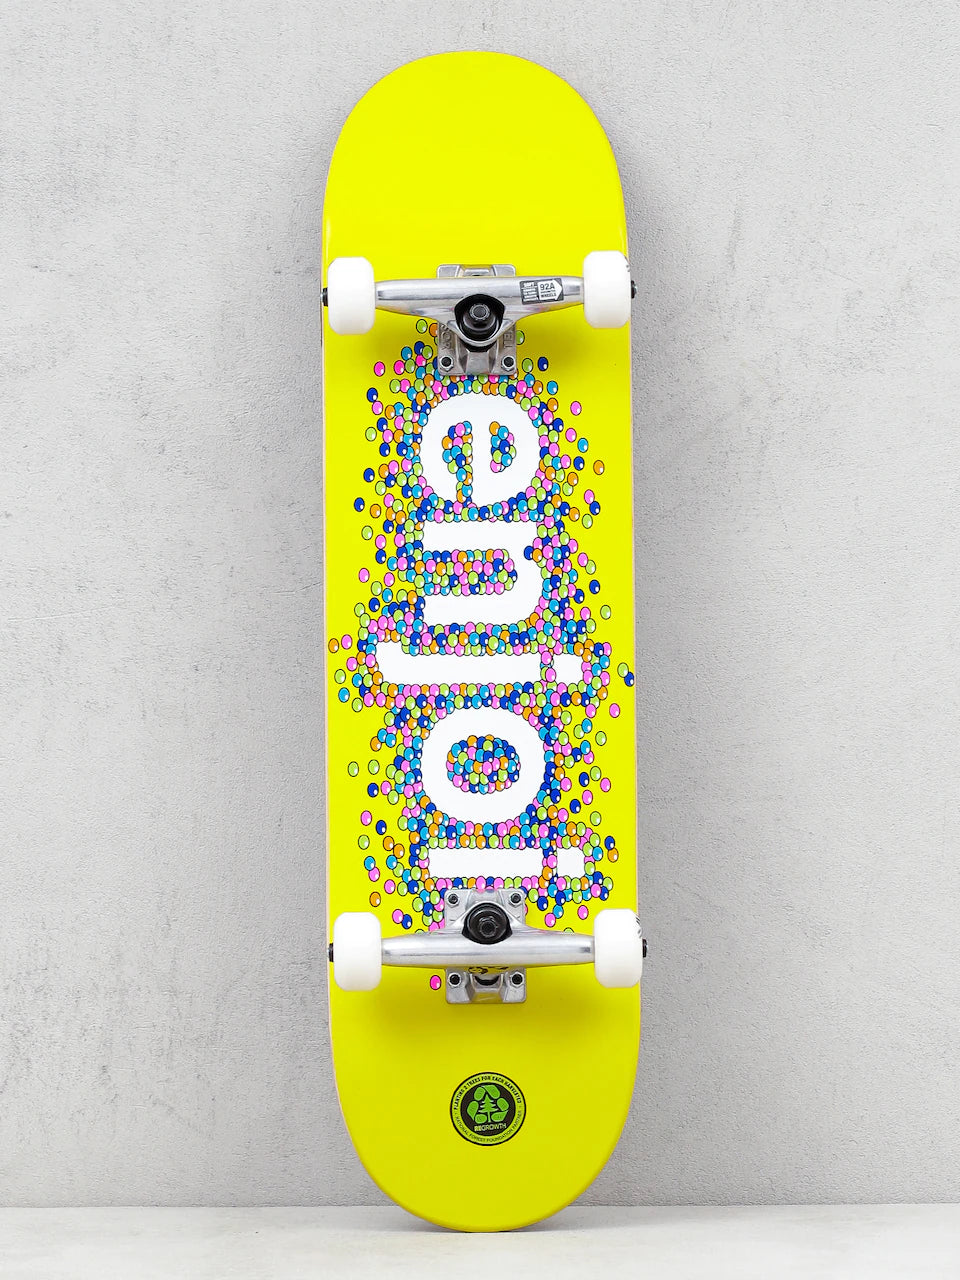 Enjoi Candy coated complete skateboard